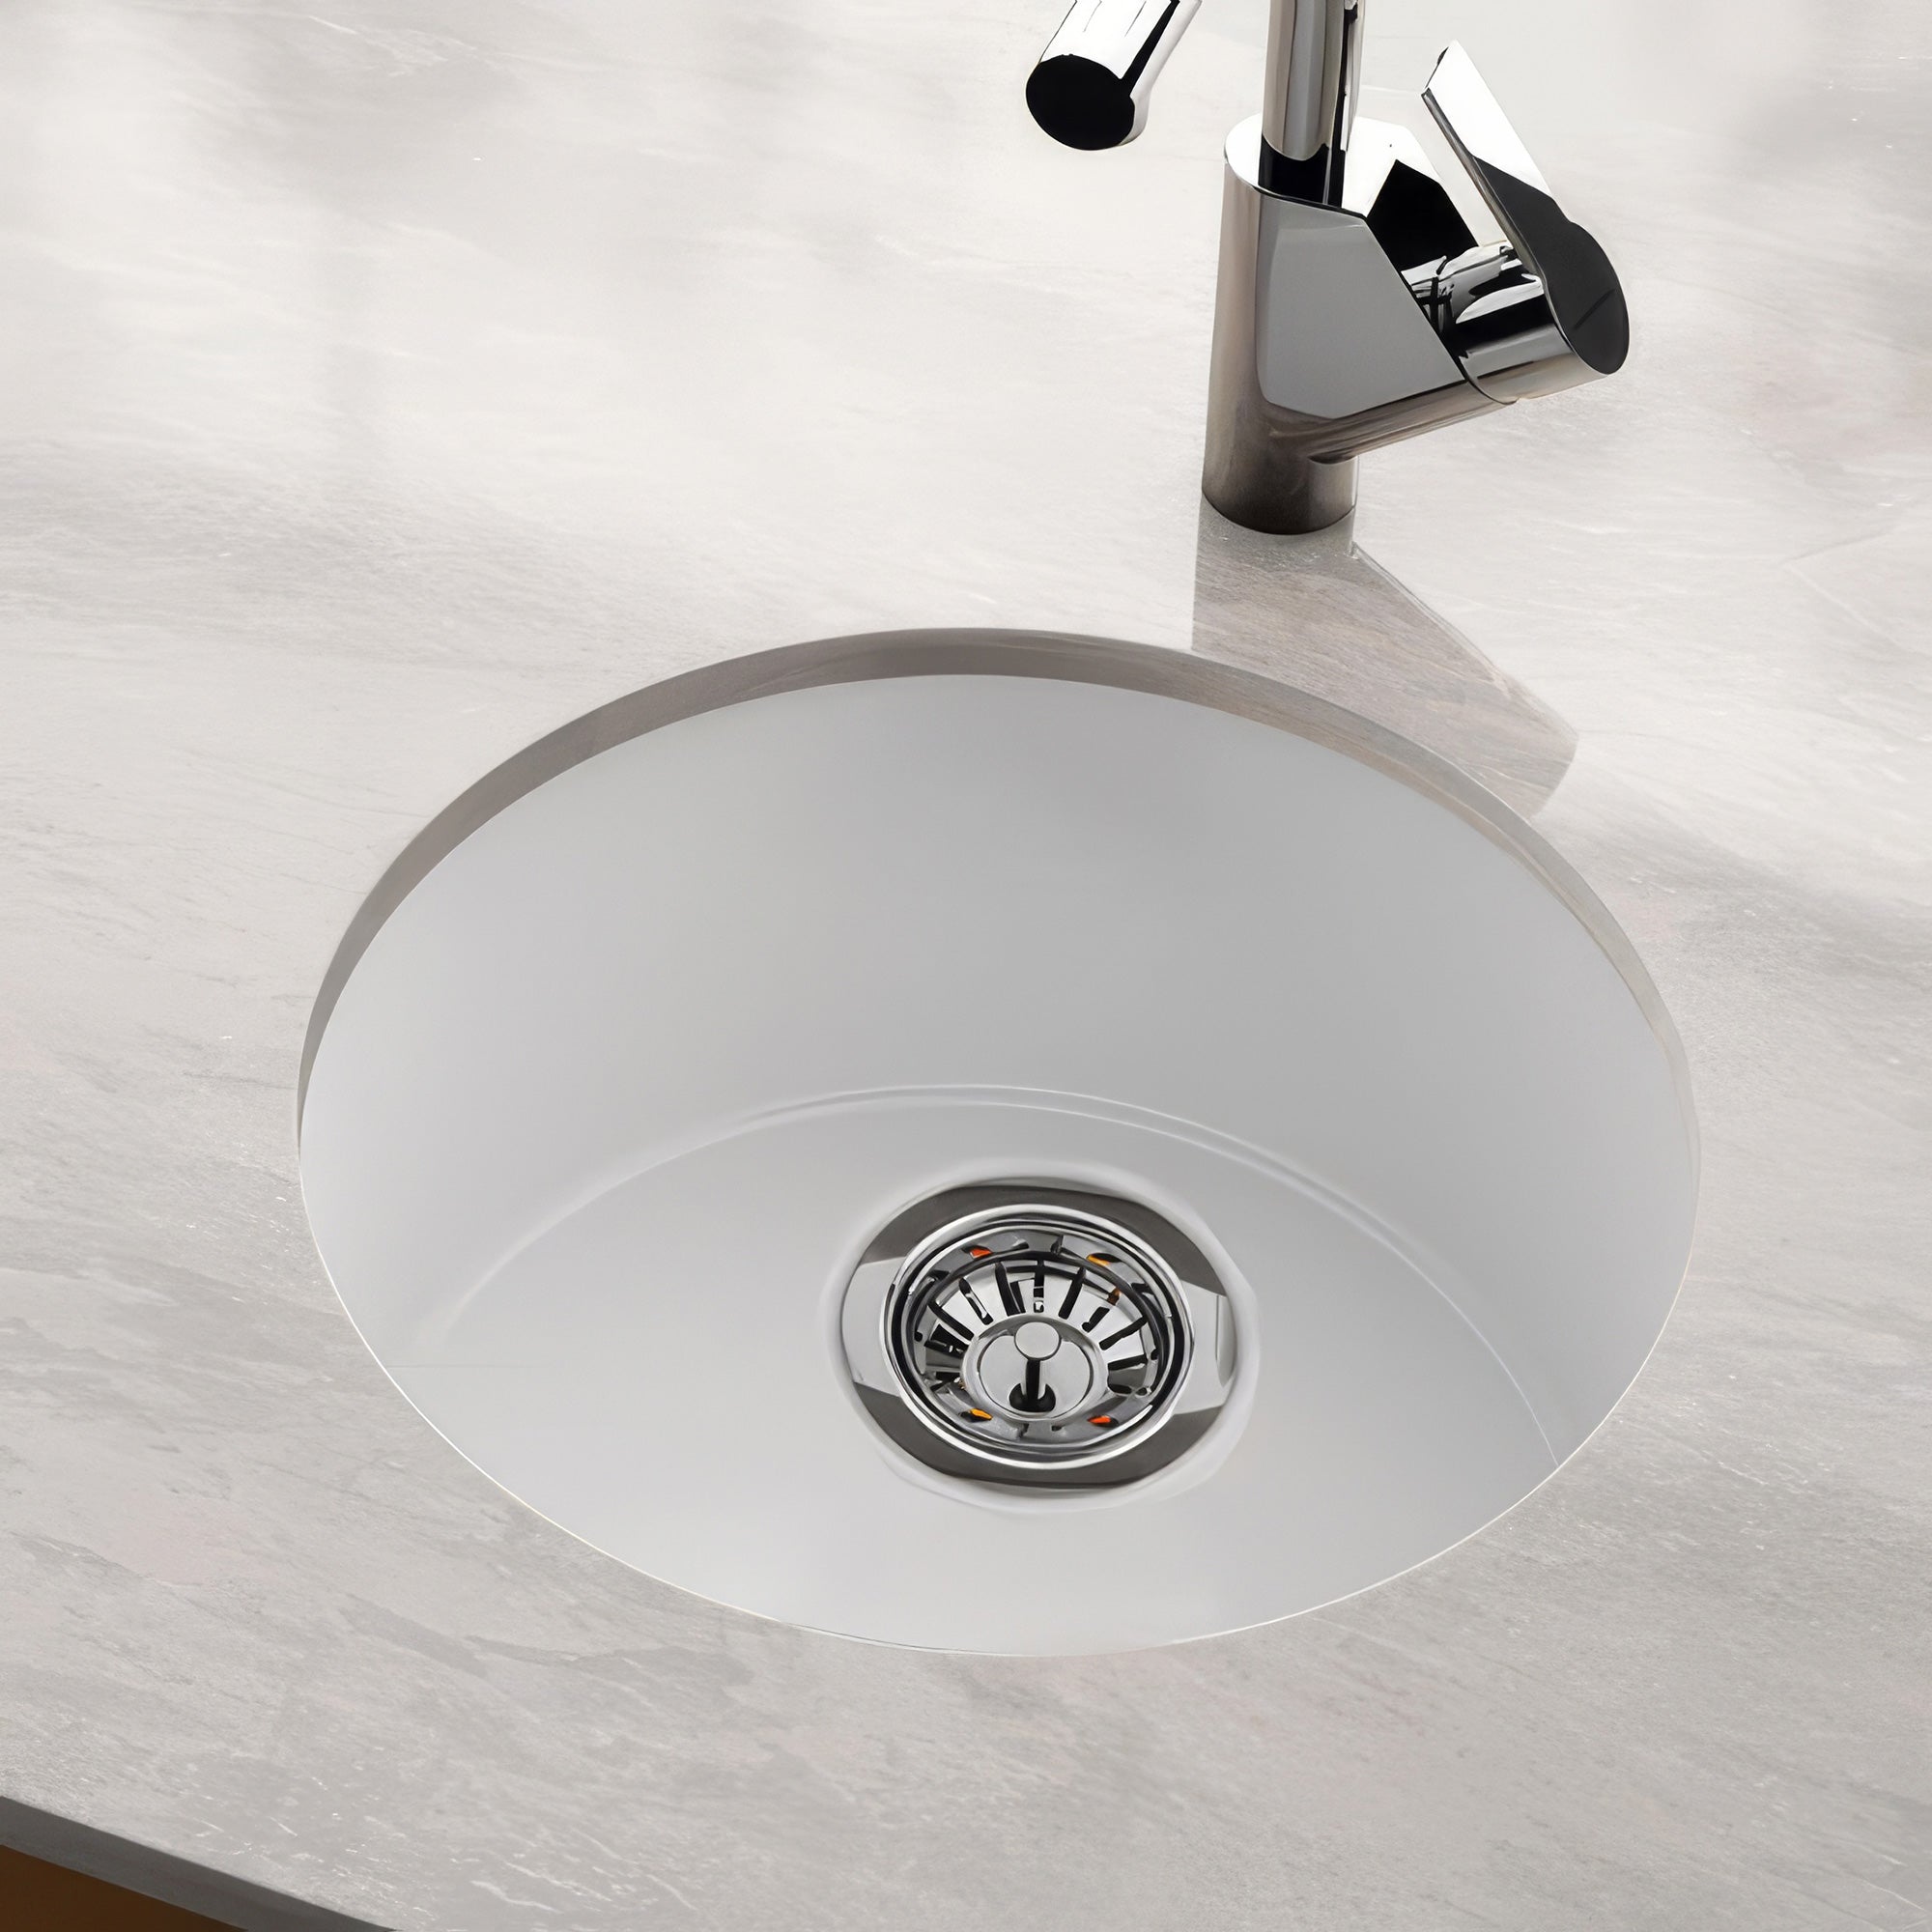 18" Circular Undermount/ Drop-In Fireclay Kitchen Sink with Rear Center Drain Location